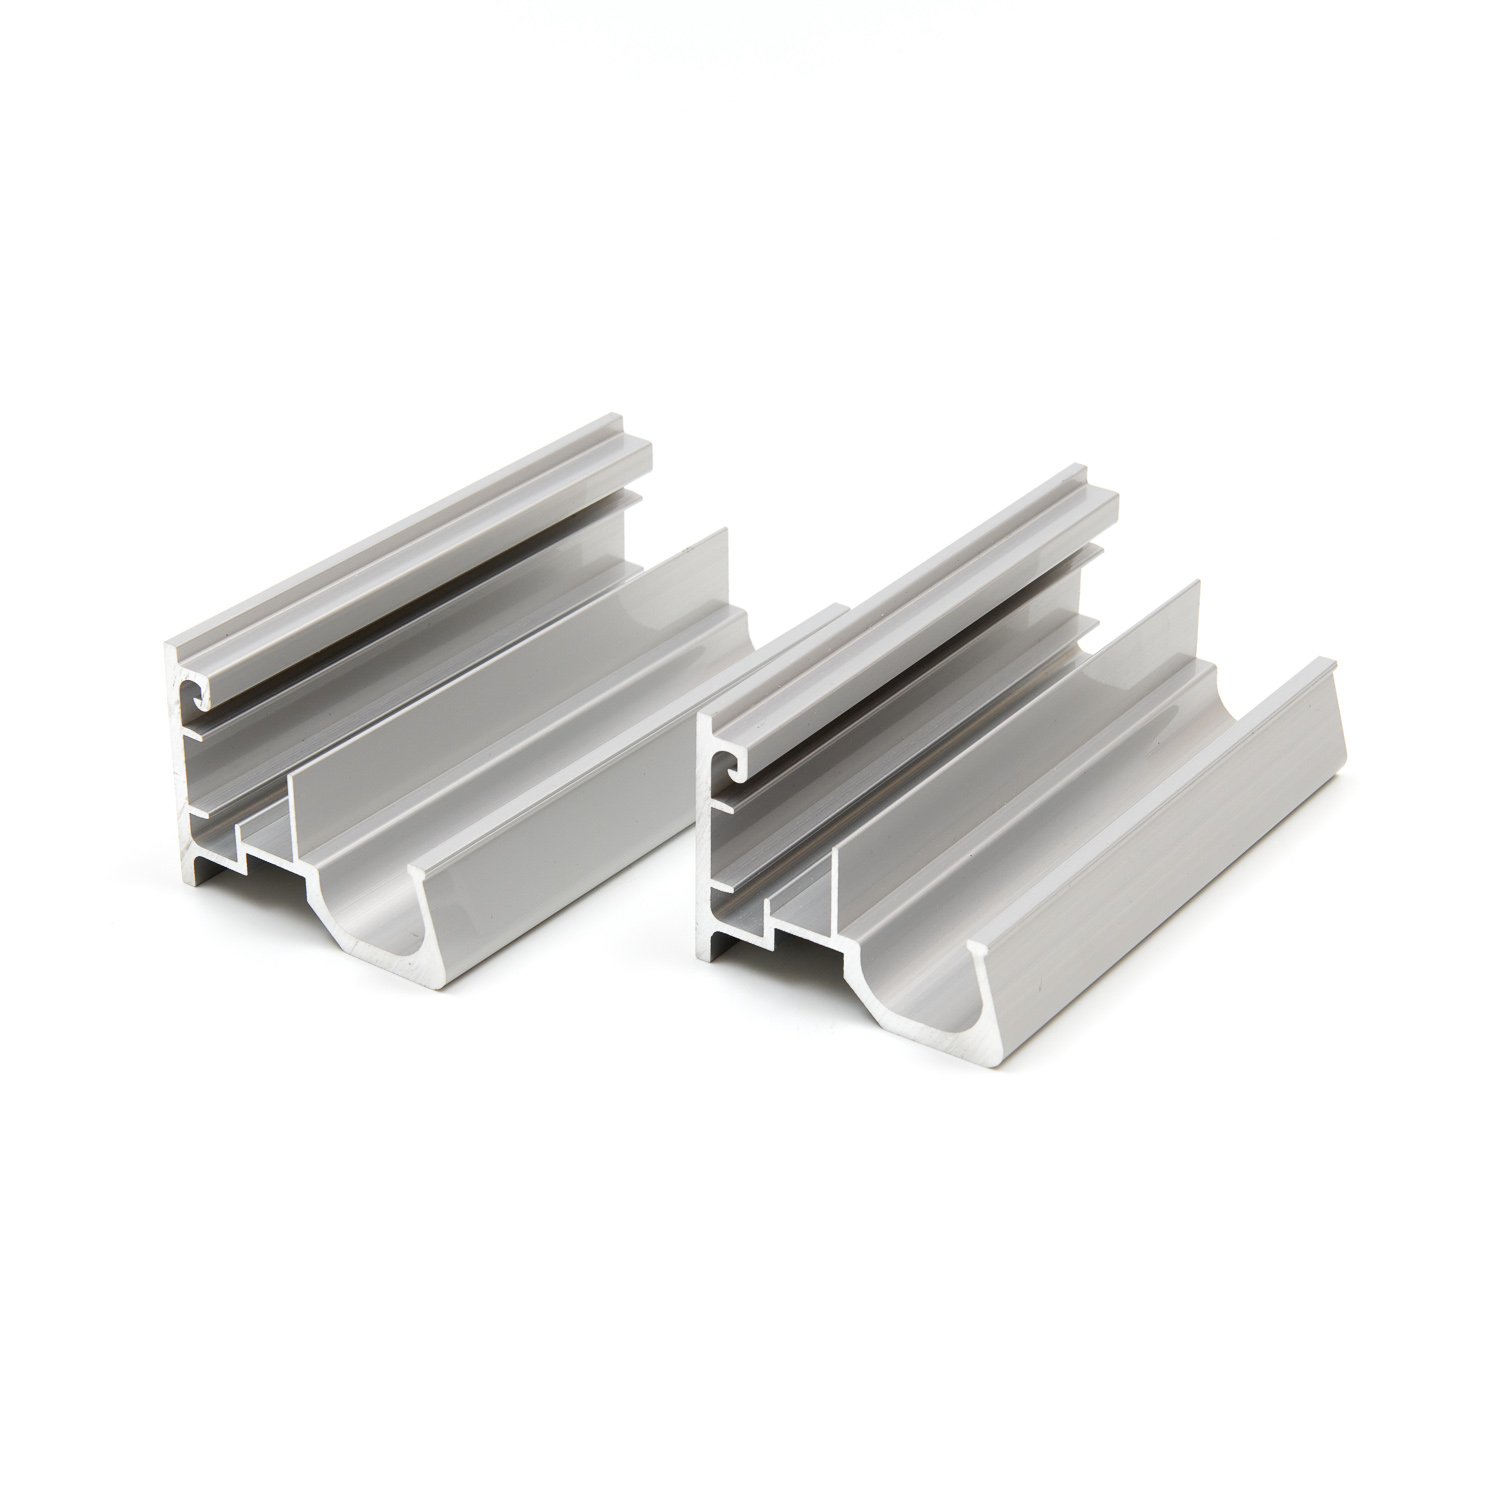 Aluminum Extruded Hollow Profiles Light Weight Aluminum Tubing / Bar / Pipe